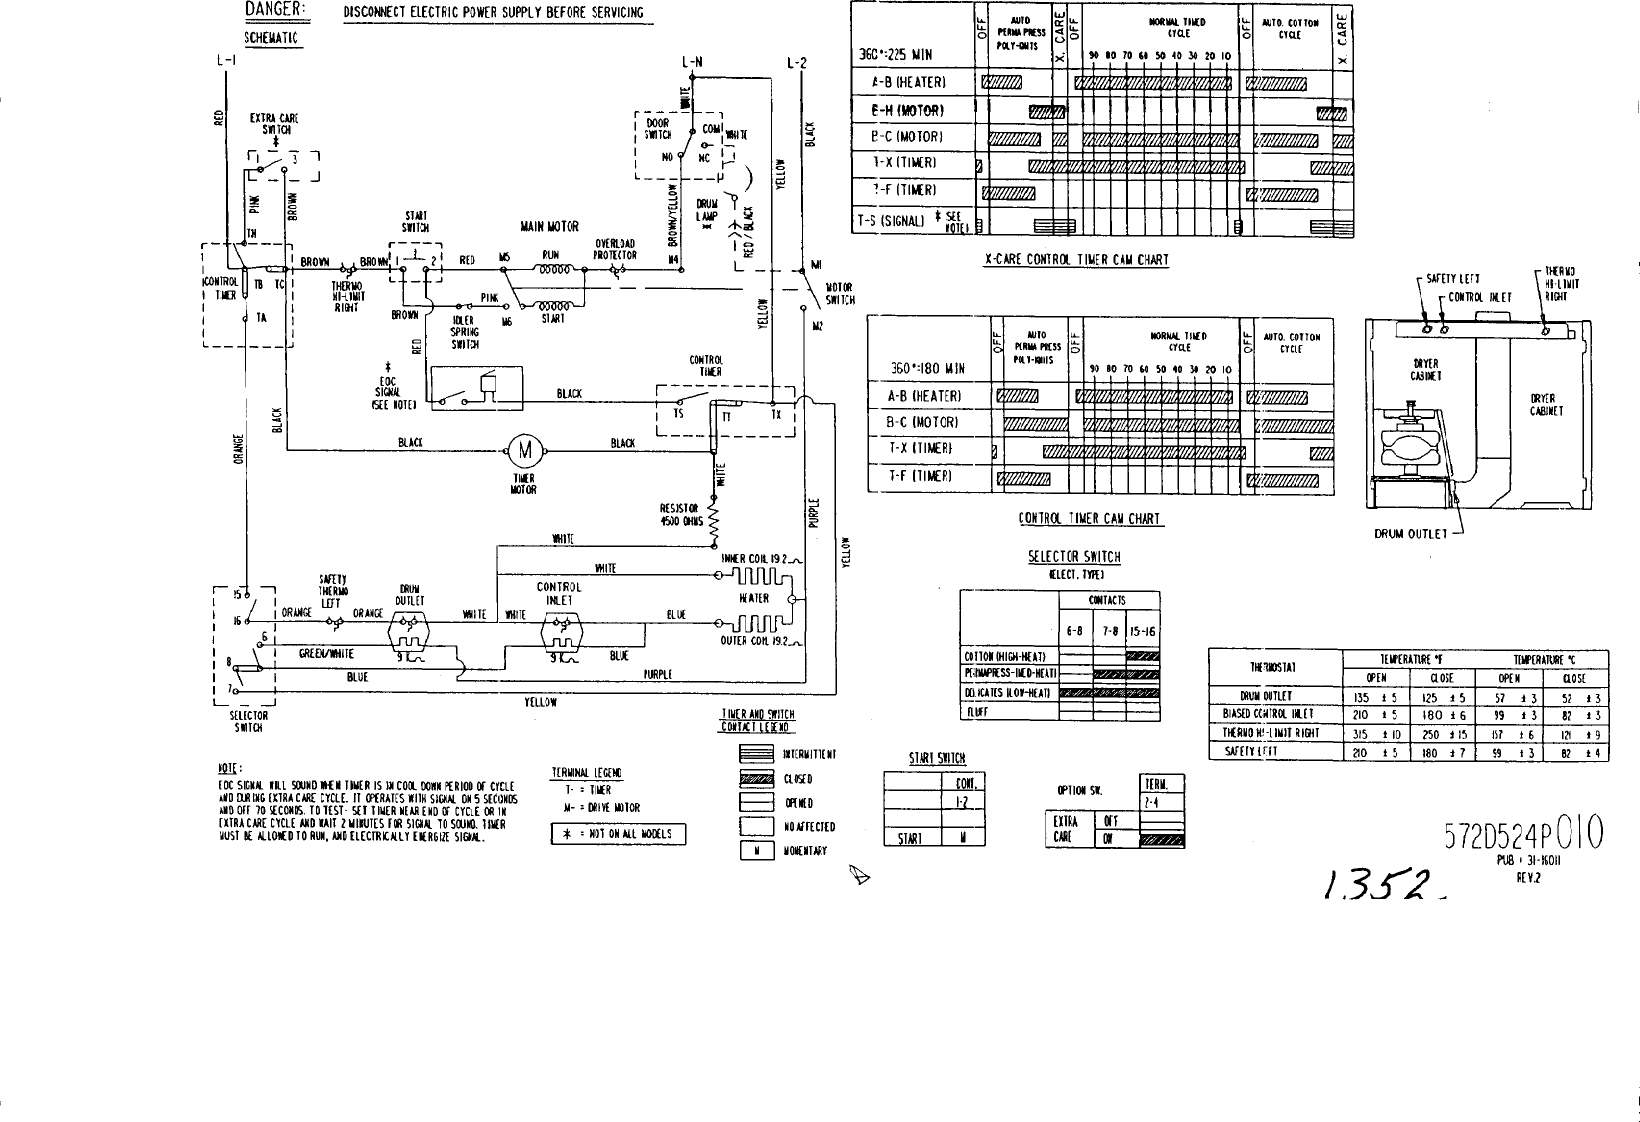 Page 1 of 2 - Friday, May 21, 2004 (5).max  GE Dryer - DBXR453EVOWW Mini Manual 31-15352